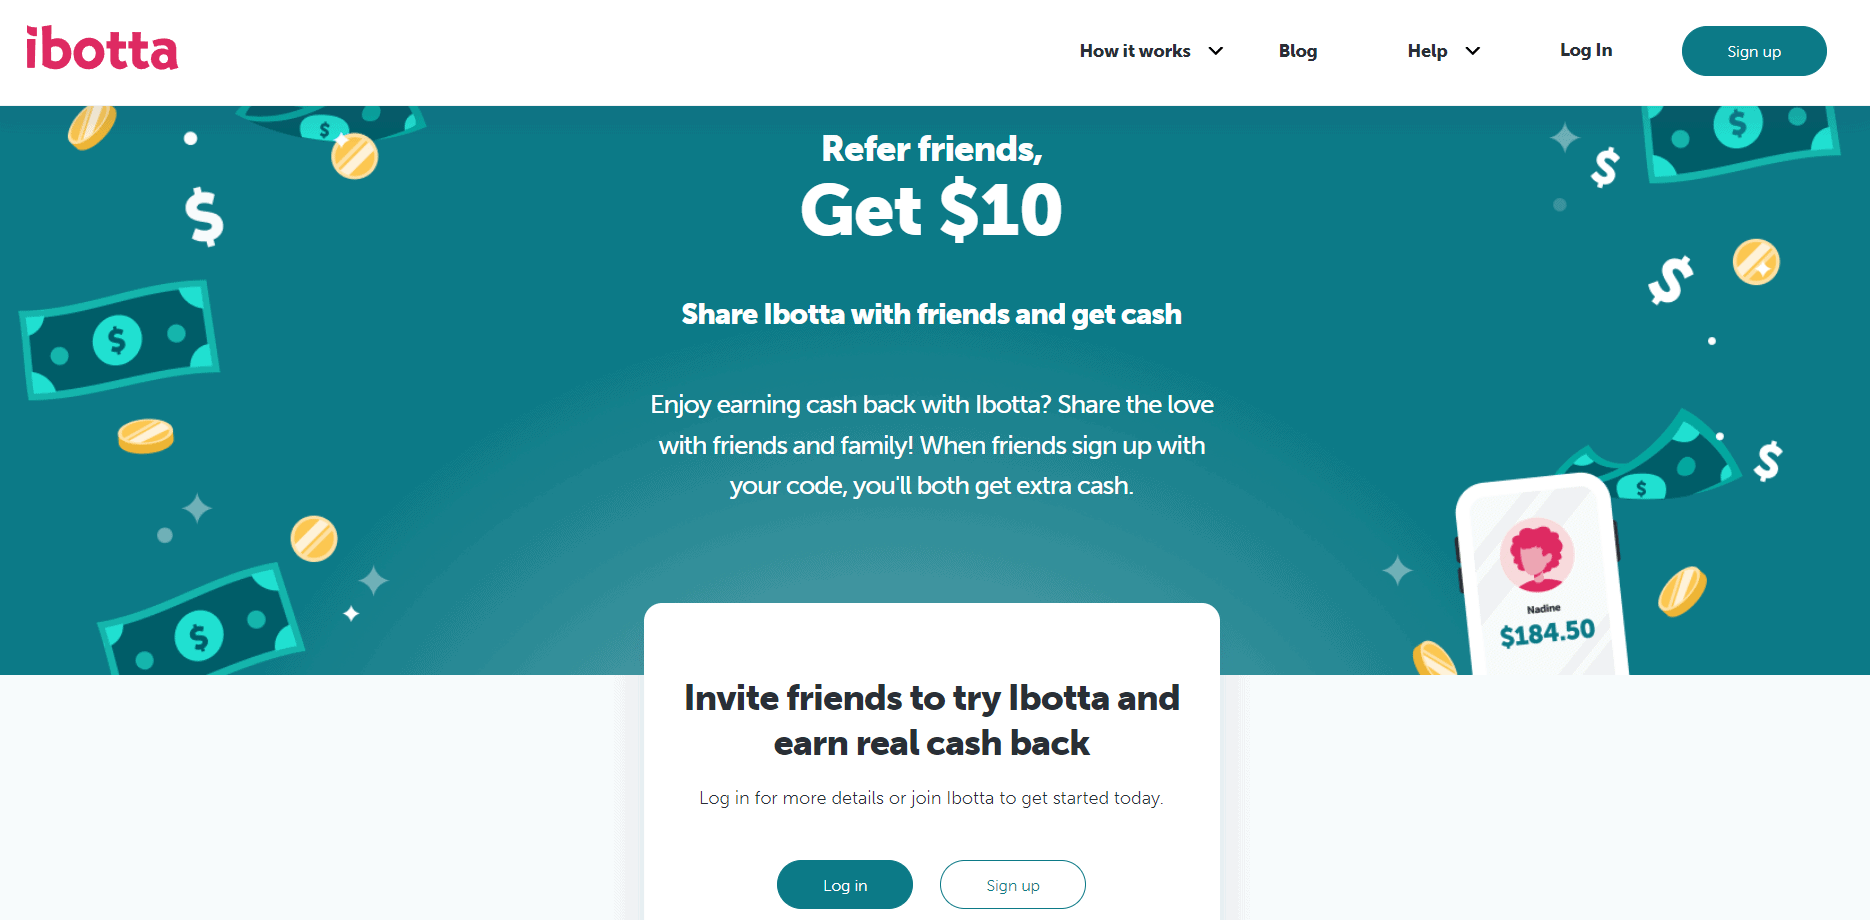 Ibotta- Best Referral Programs To Make Money